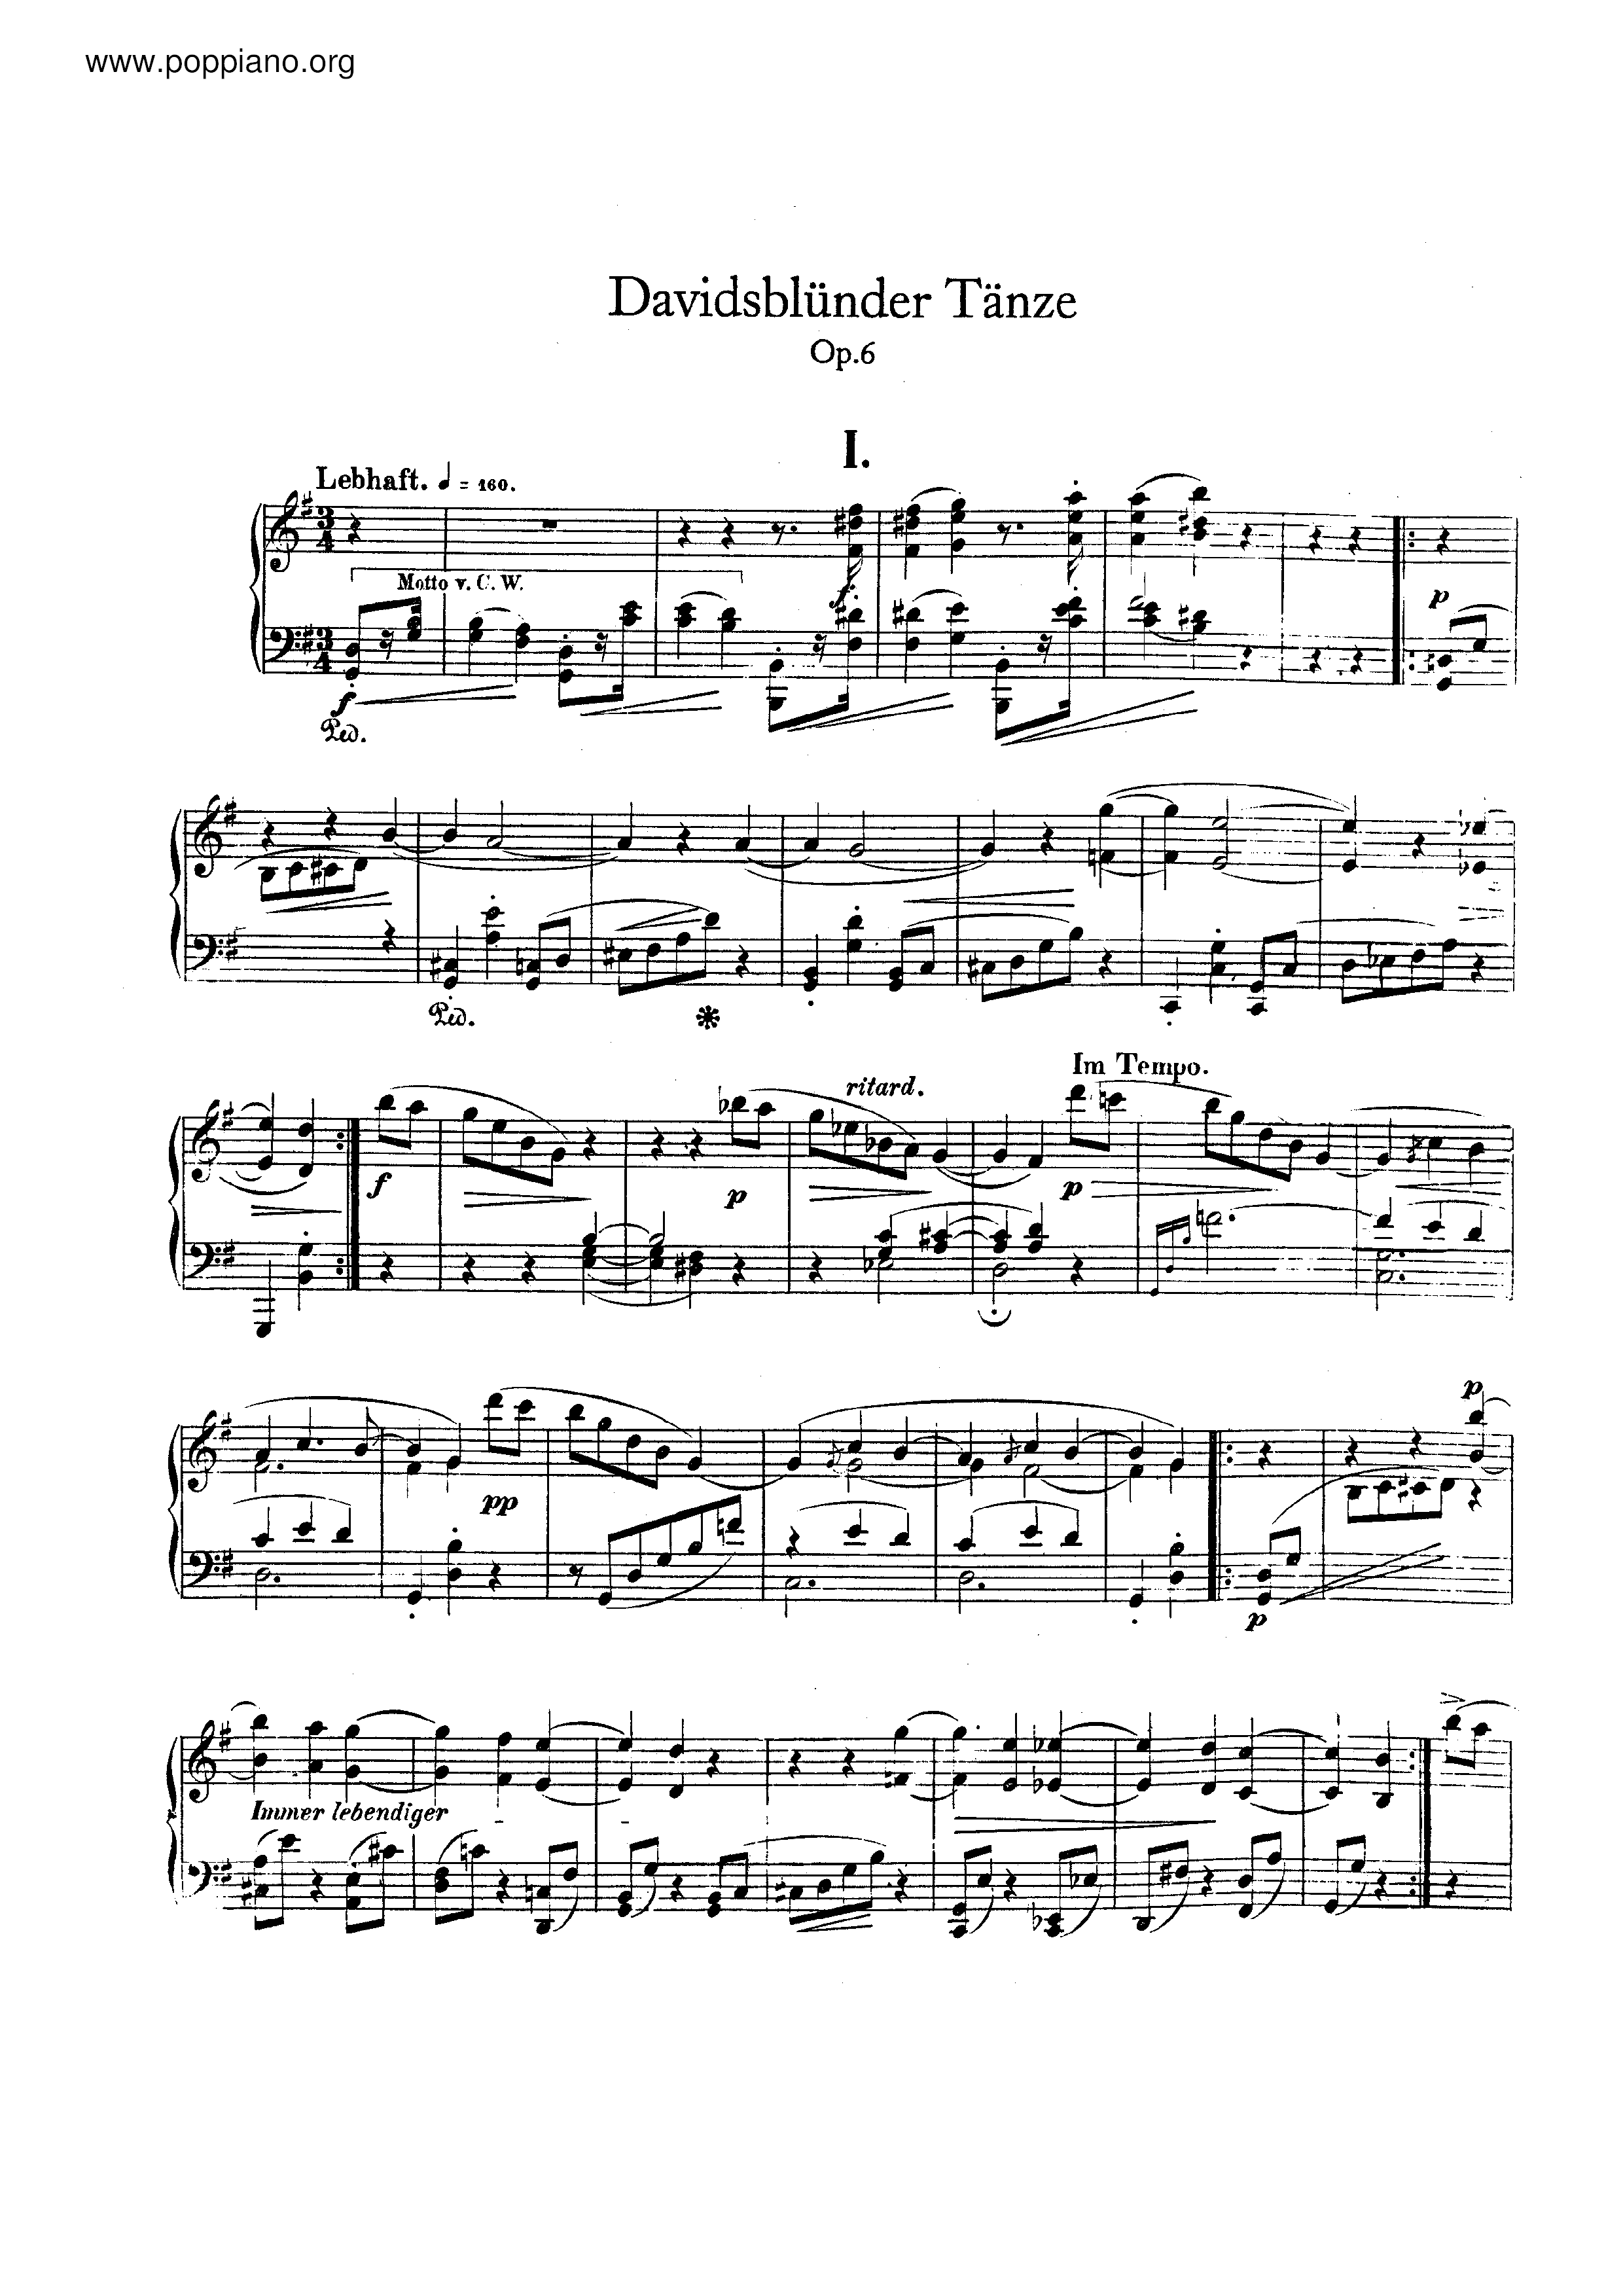 Davidsbundlertanze, Op.6 Score